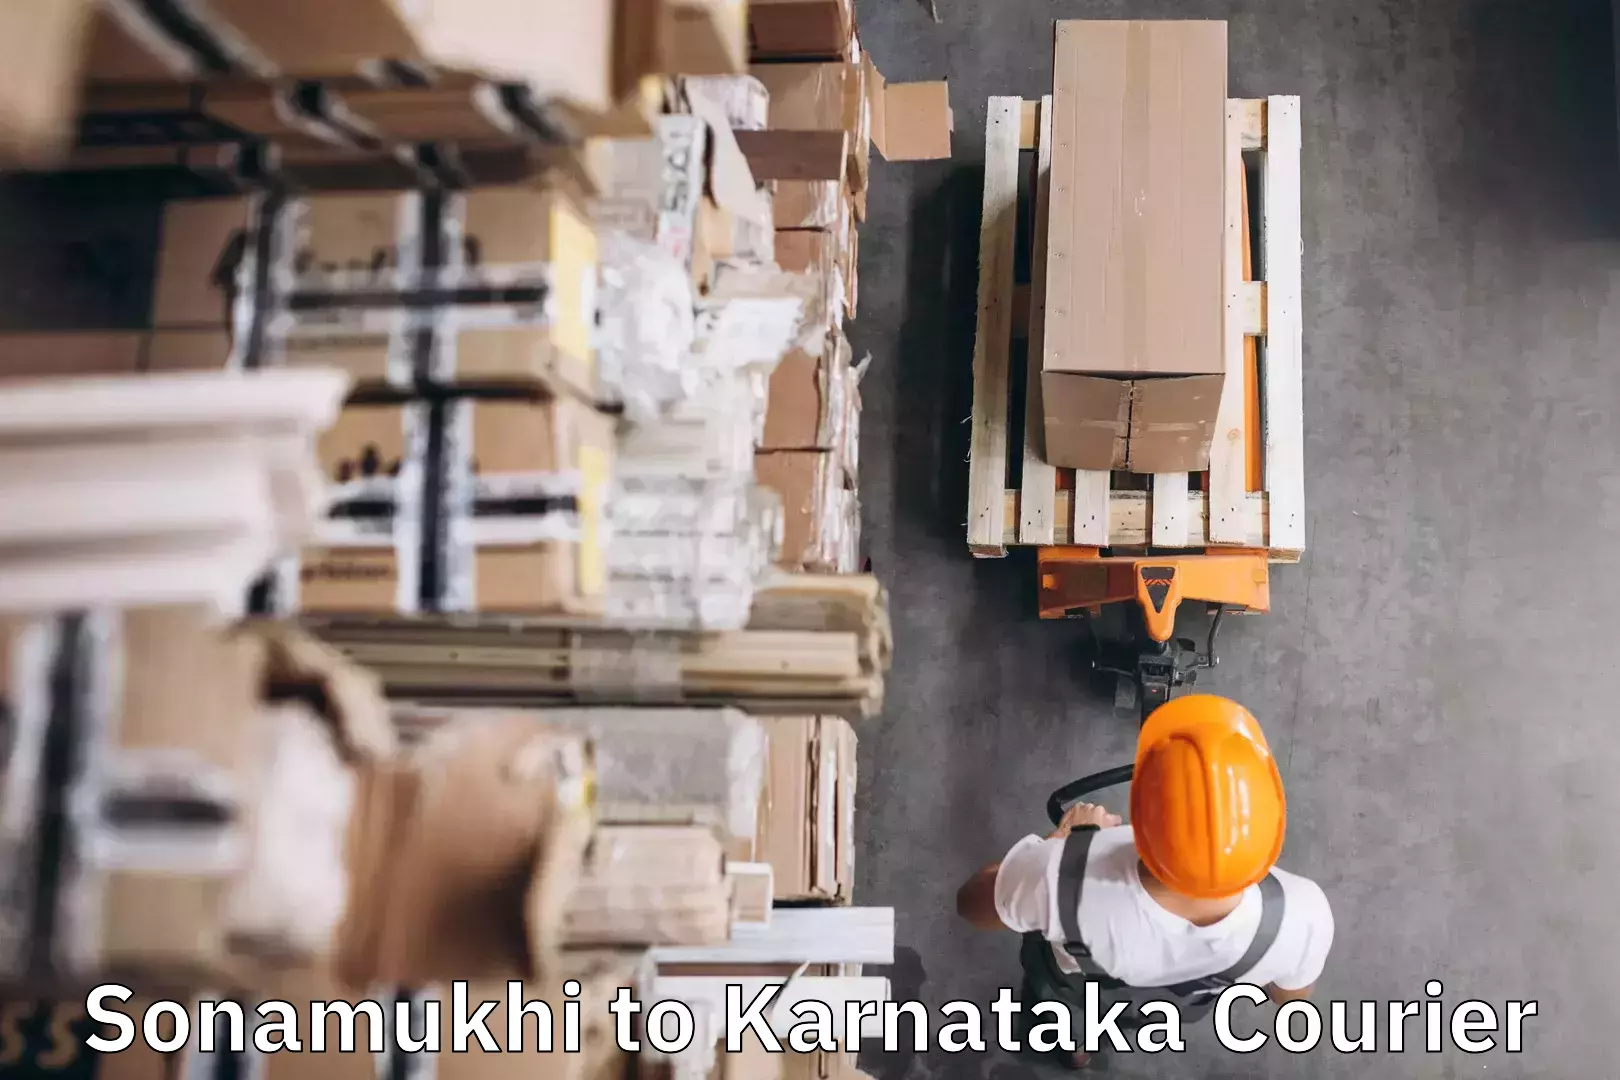 Luggage transport consultancy Sonamukhi to Karnataka